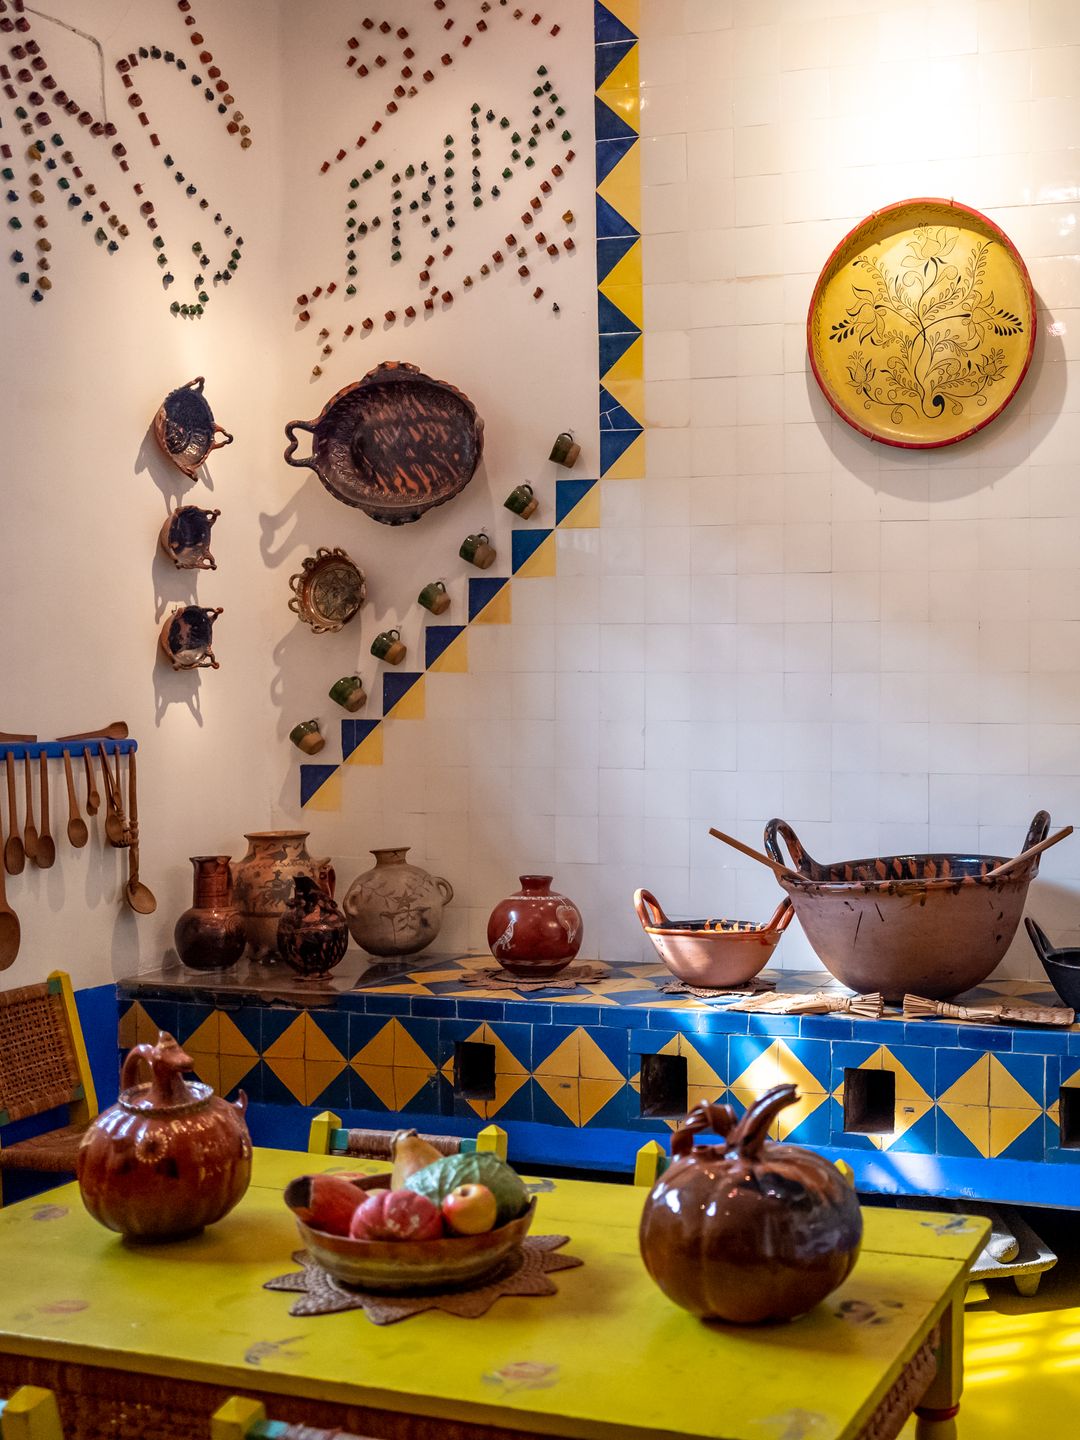 The kitchen inside the Casa Azul